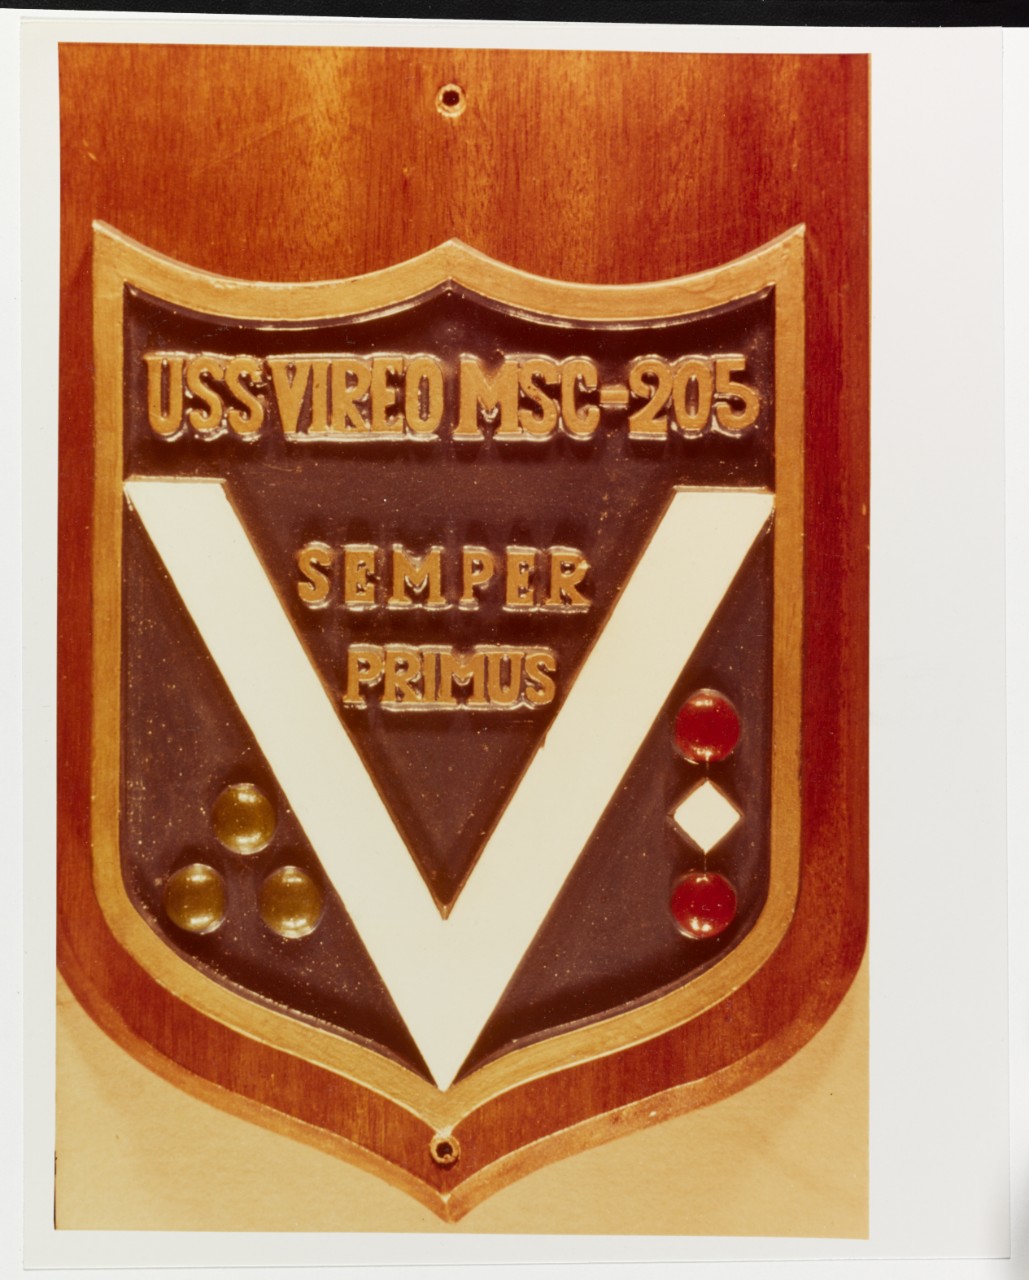 Insignia: USS VIREO (MSC-205)